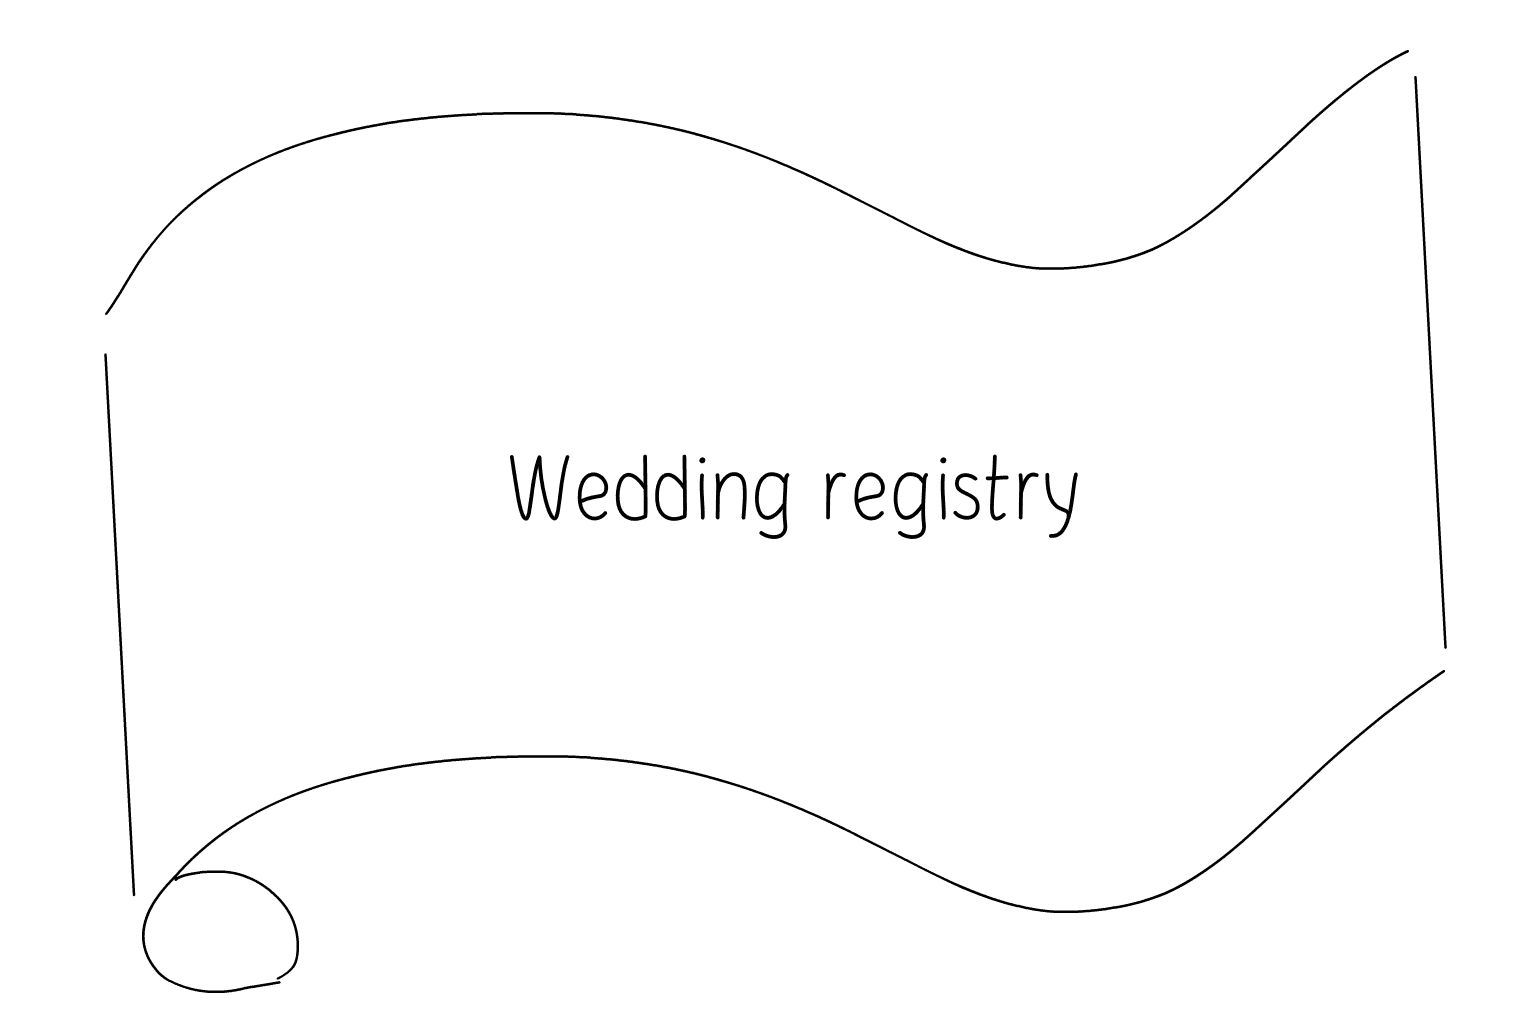 Illustration of Registry Services